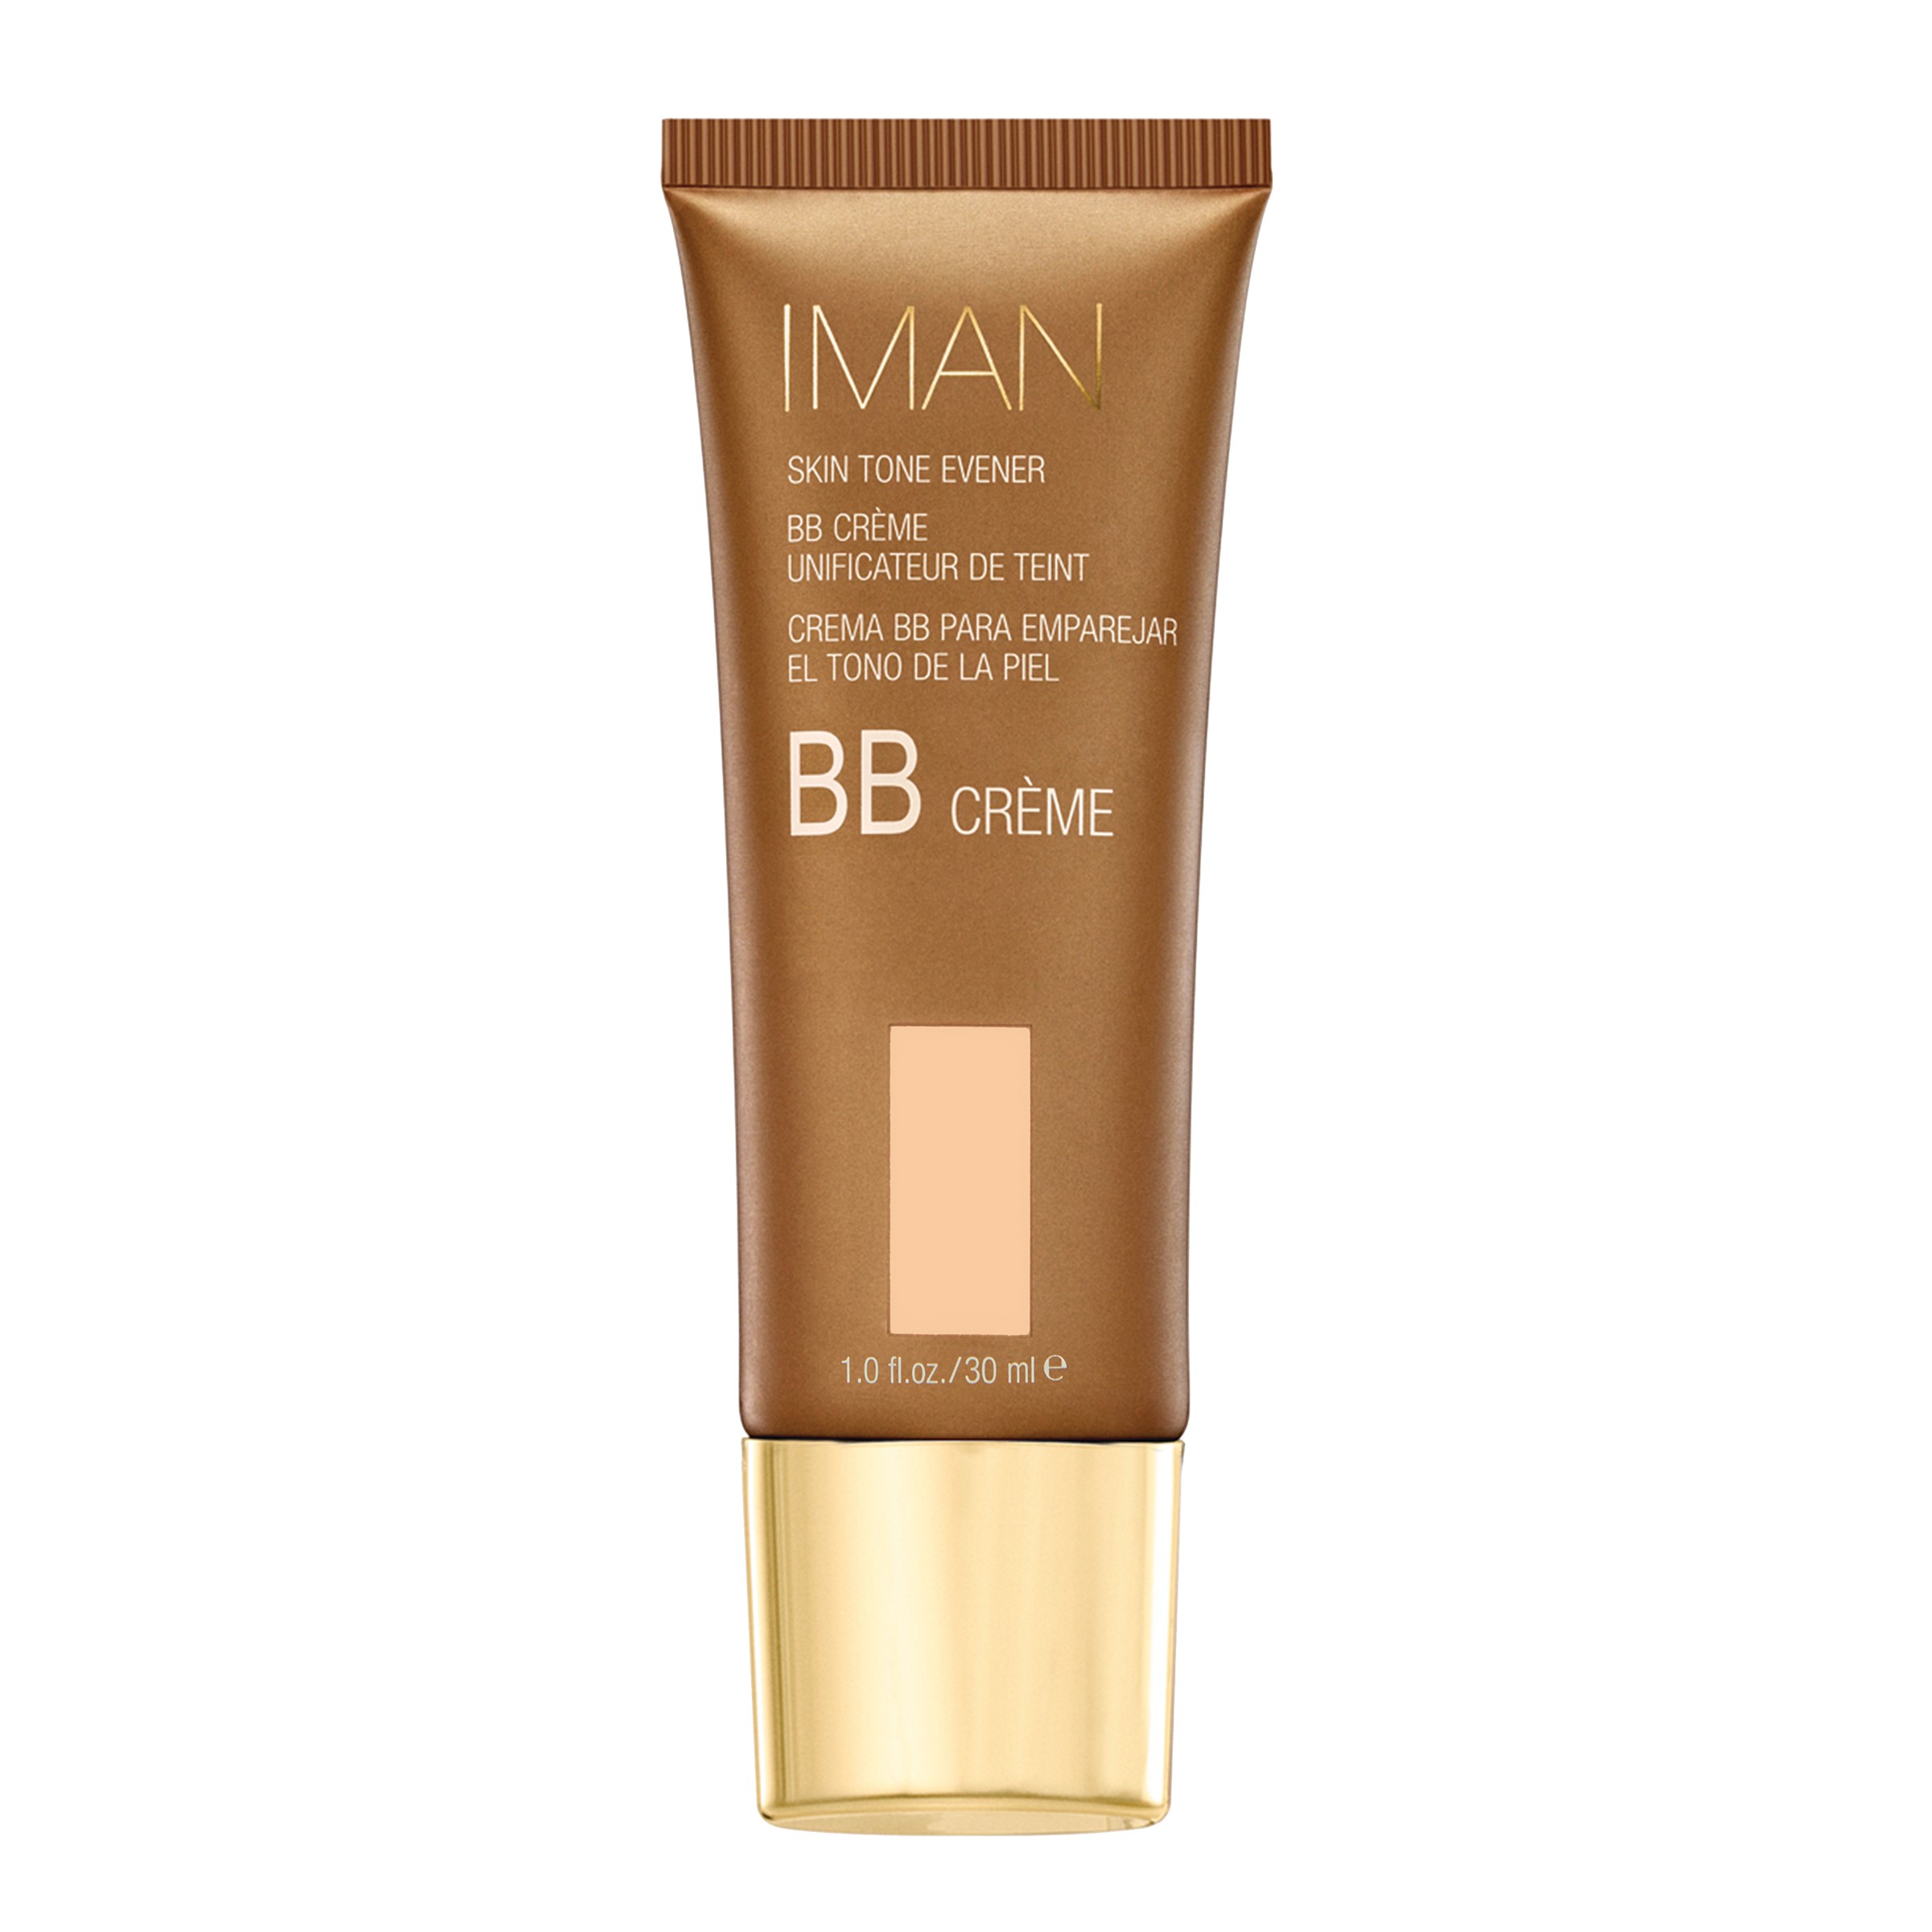 IMAN Cosmetics Skin Tone Evener BB Crème, Light Sand - image 1 of 2